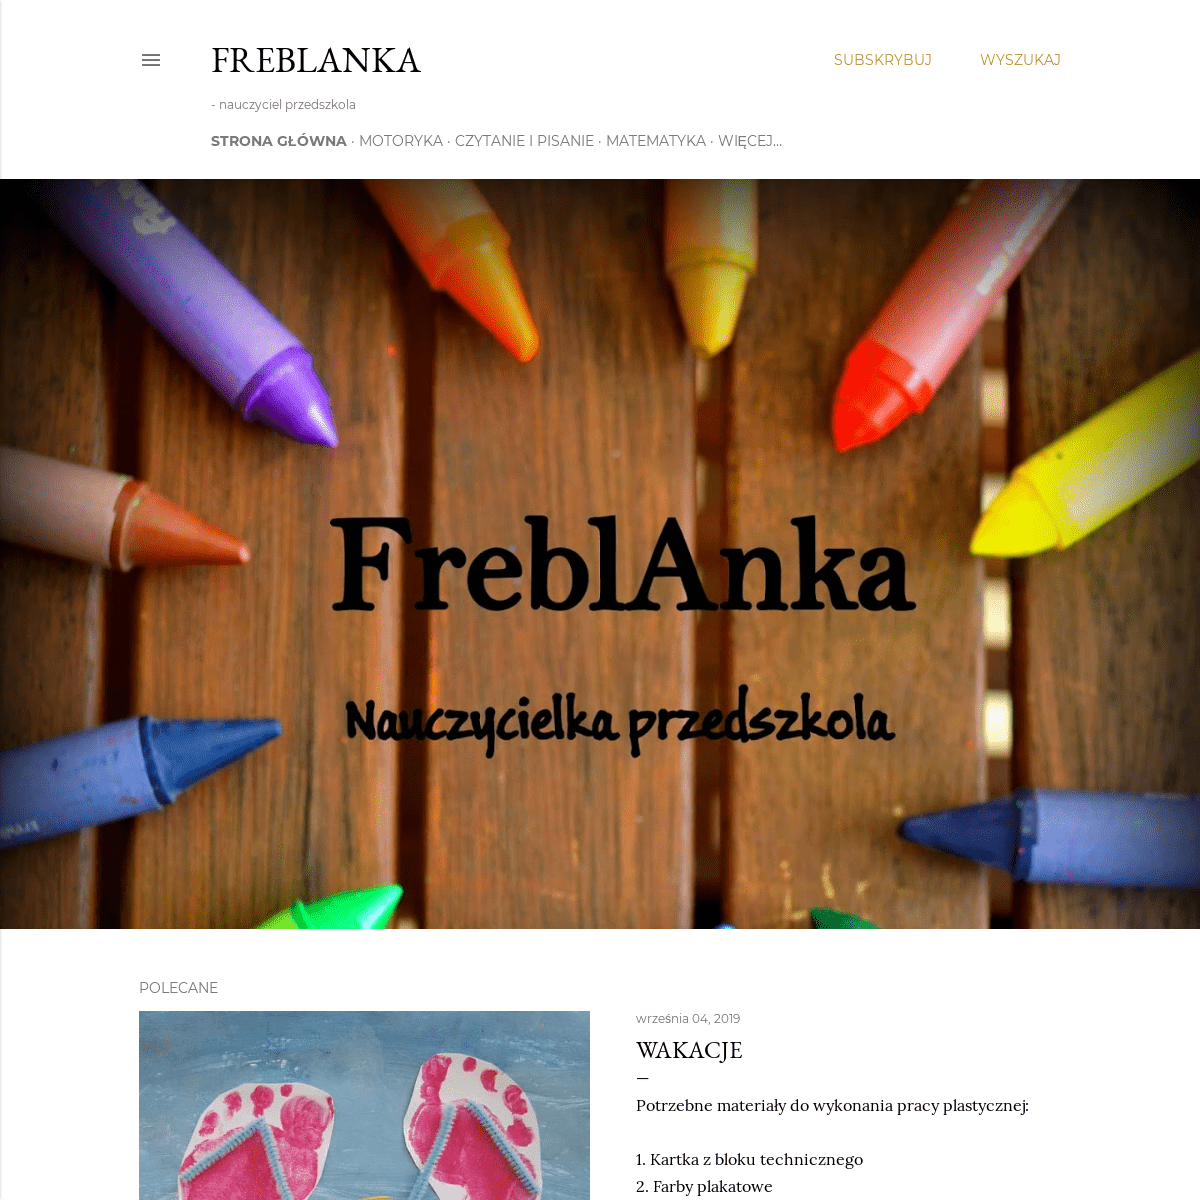 A complete backup of freblanka.blogspot.com